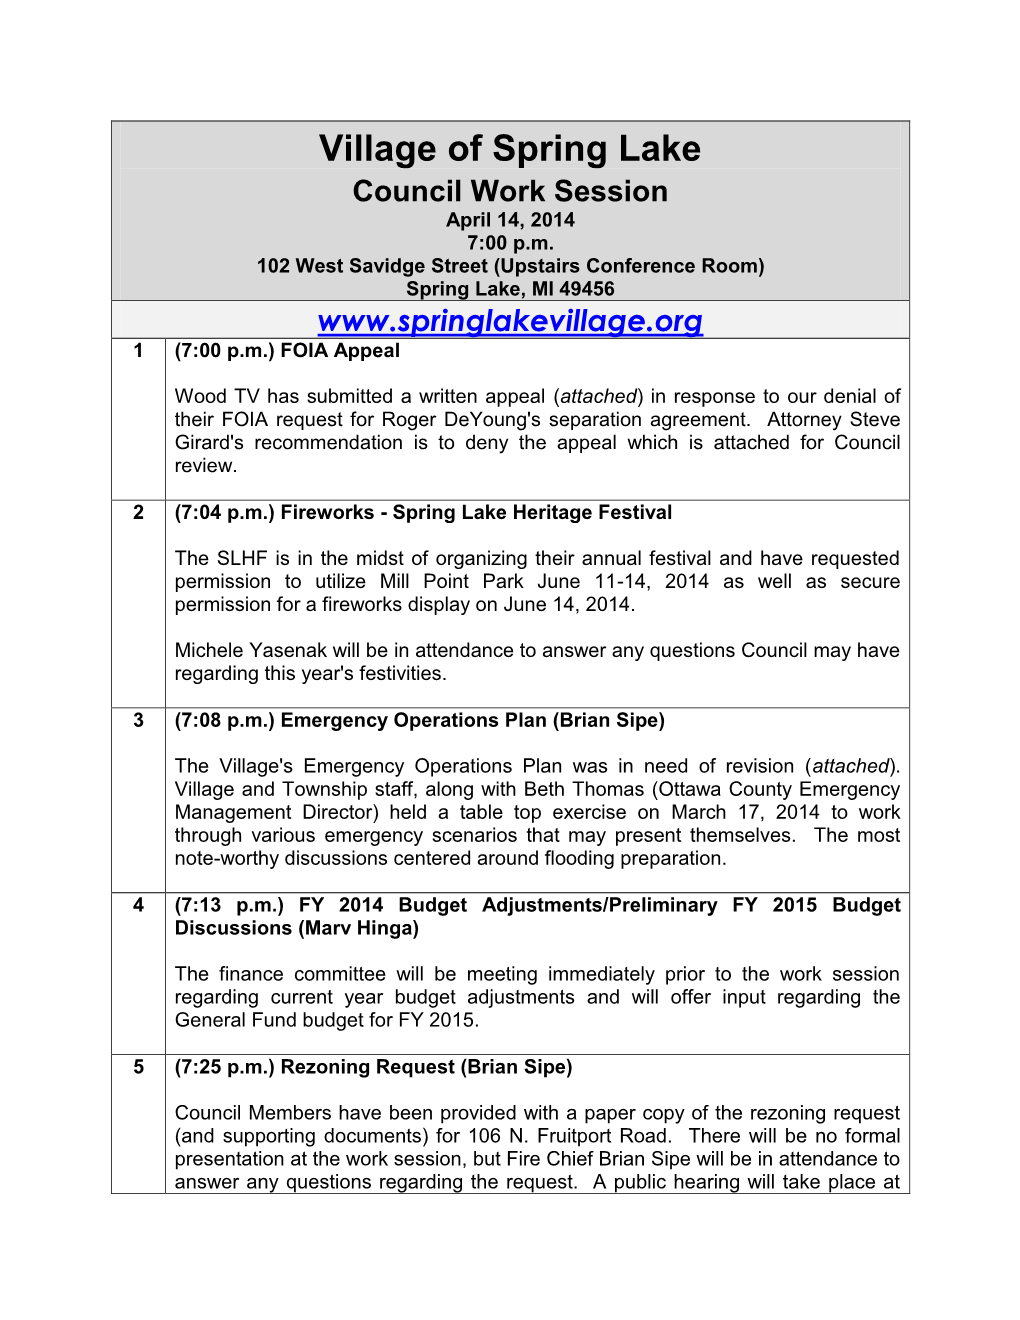 Village of Spring Lake Council Work Session April 14, 2014 7:00 P.M